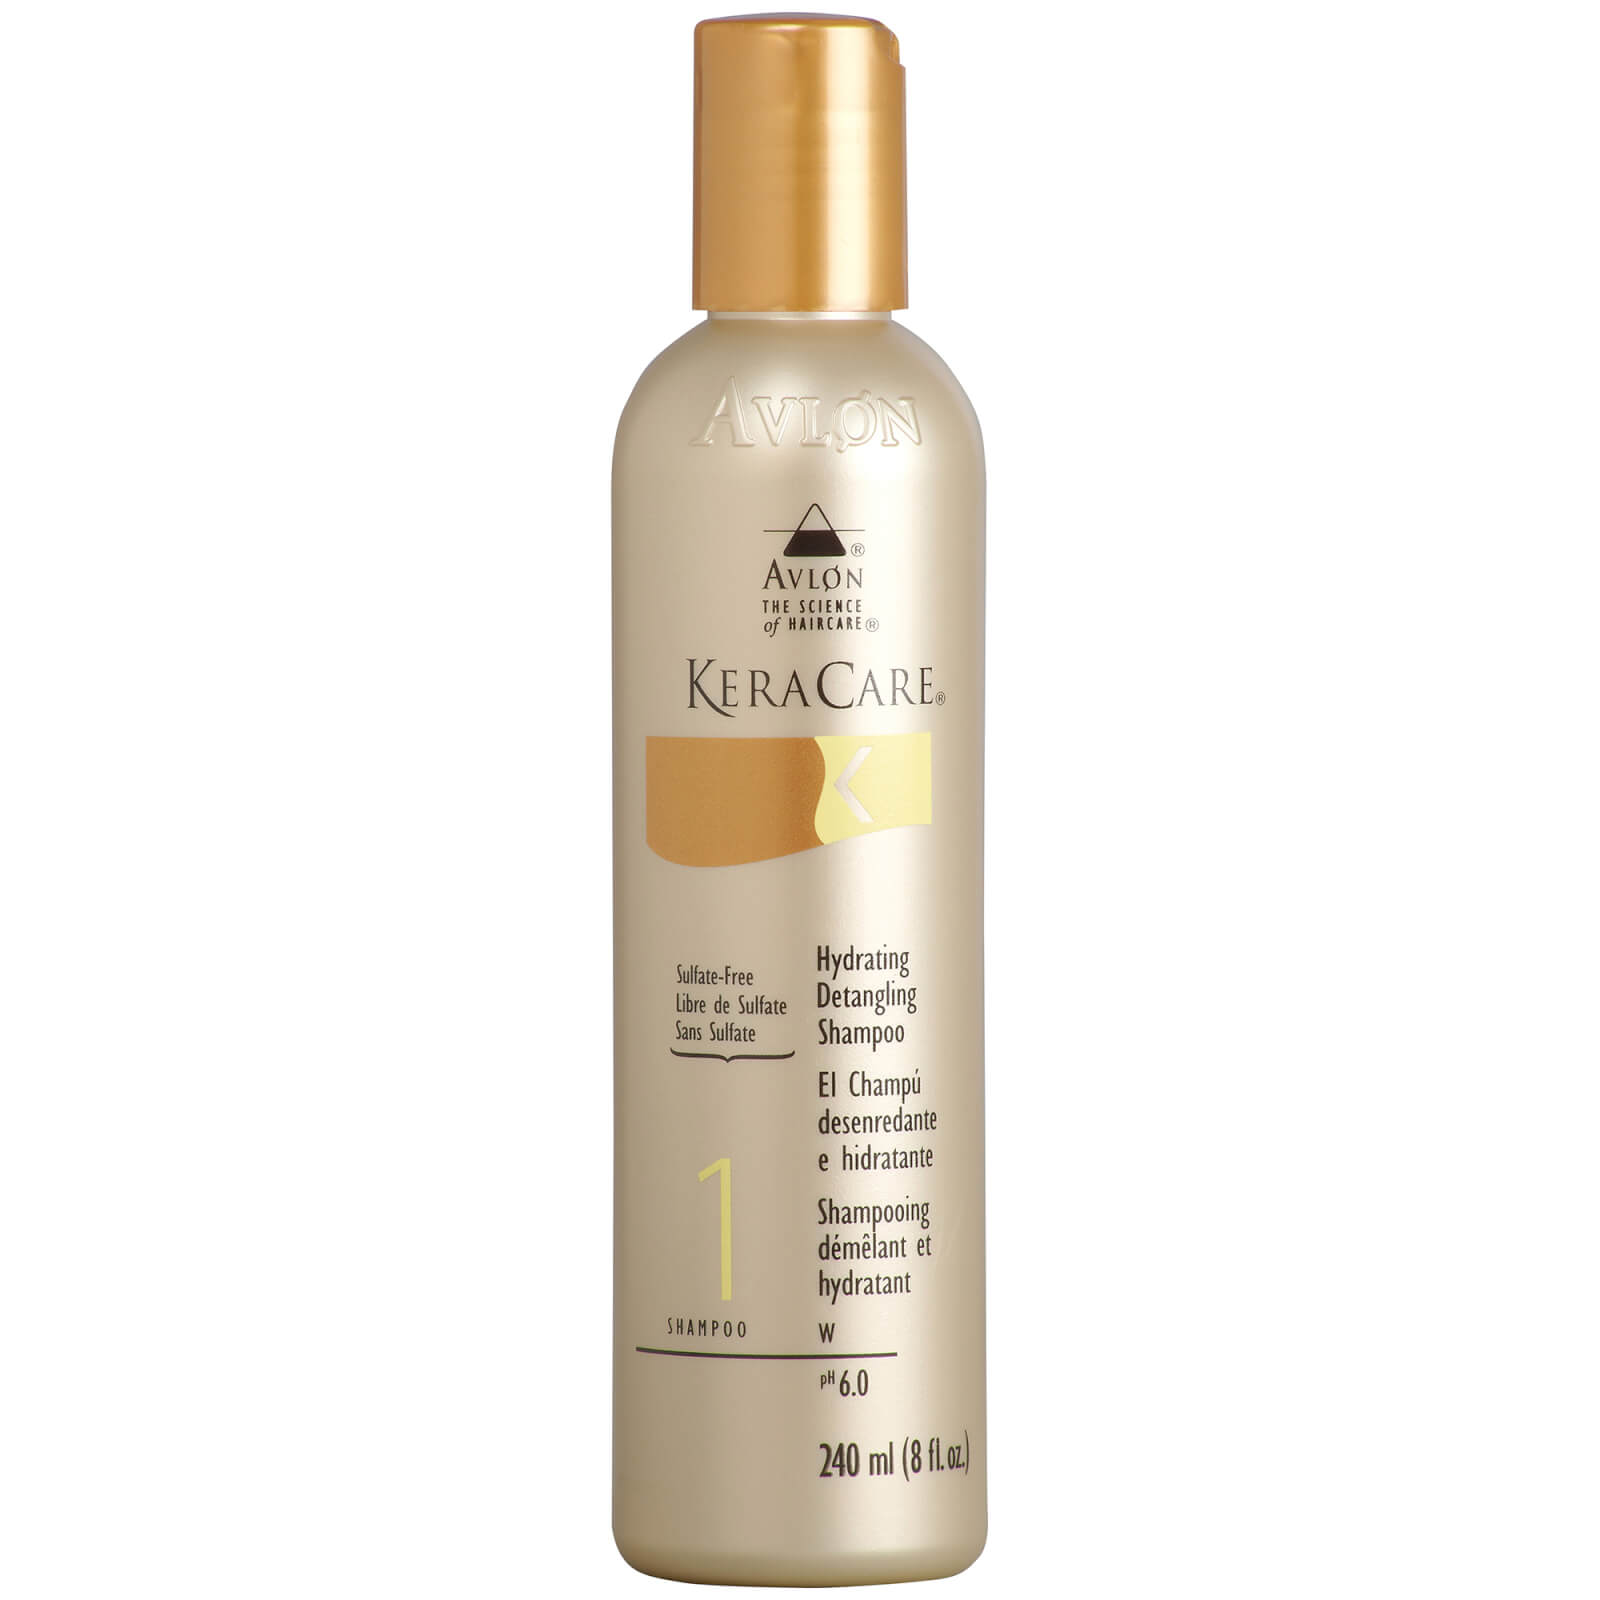 Photos - Hair Product KeraCare Hydrating Detangling Shampoo 240ml 53943